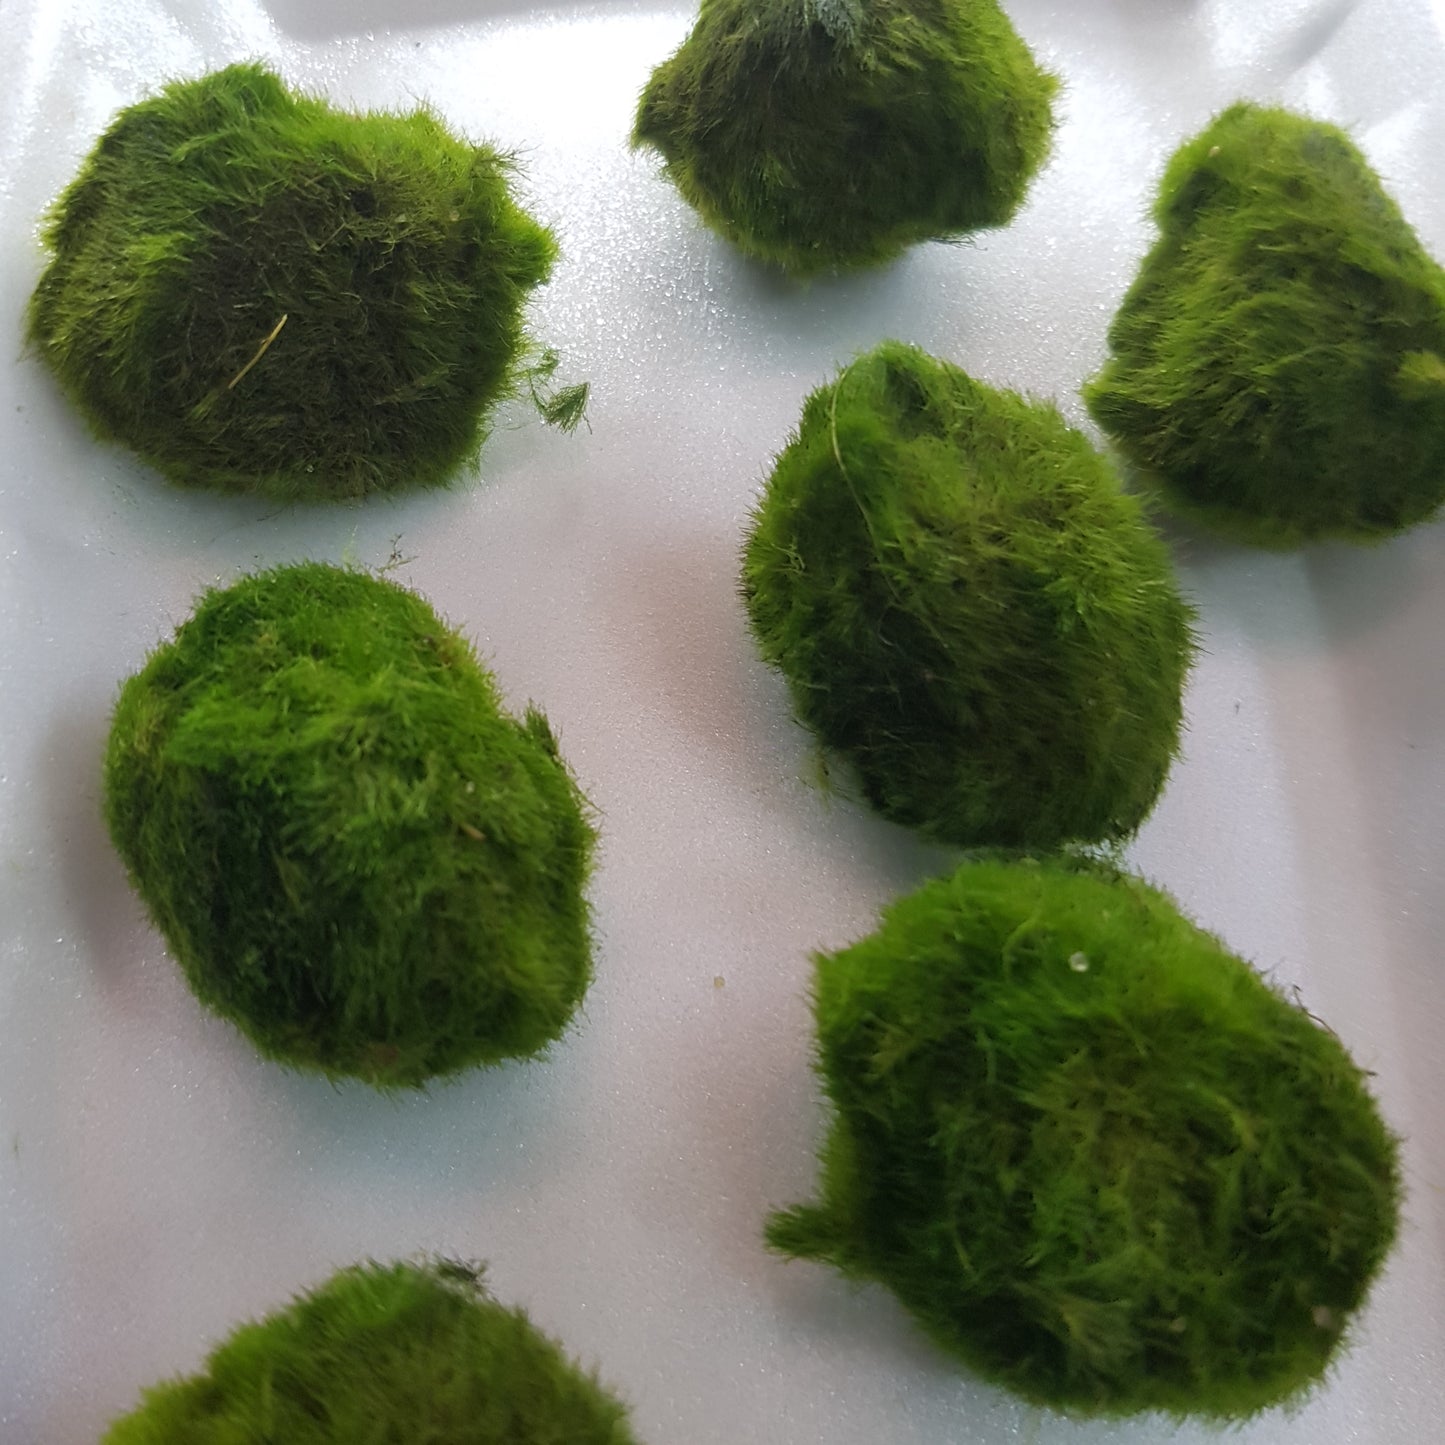 Chladophlora “Moss ball“ - approx 3cm - EU grown